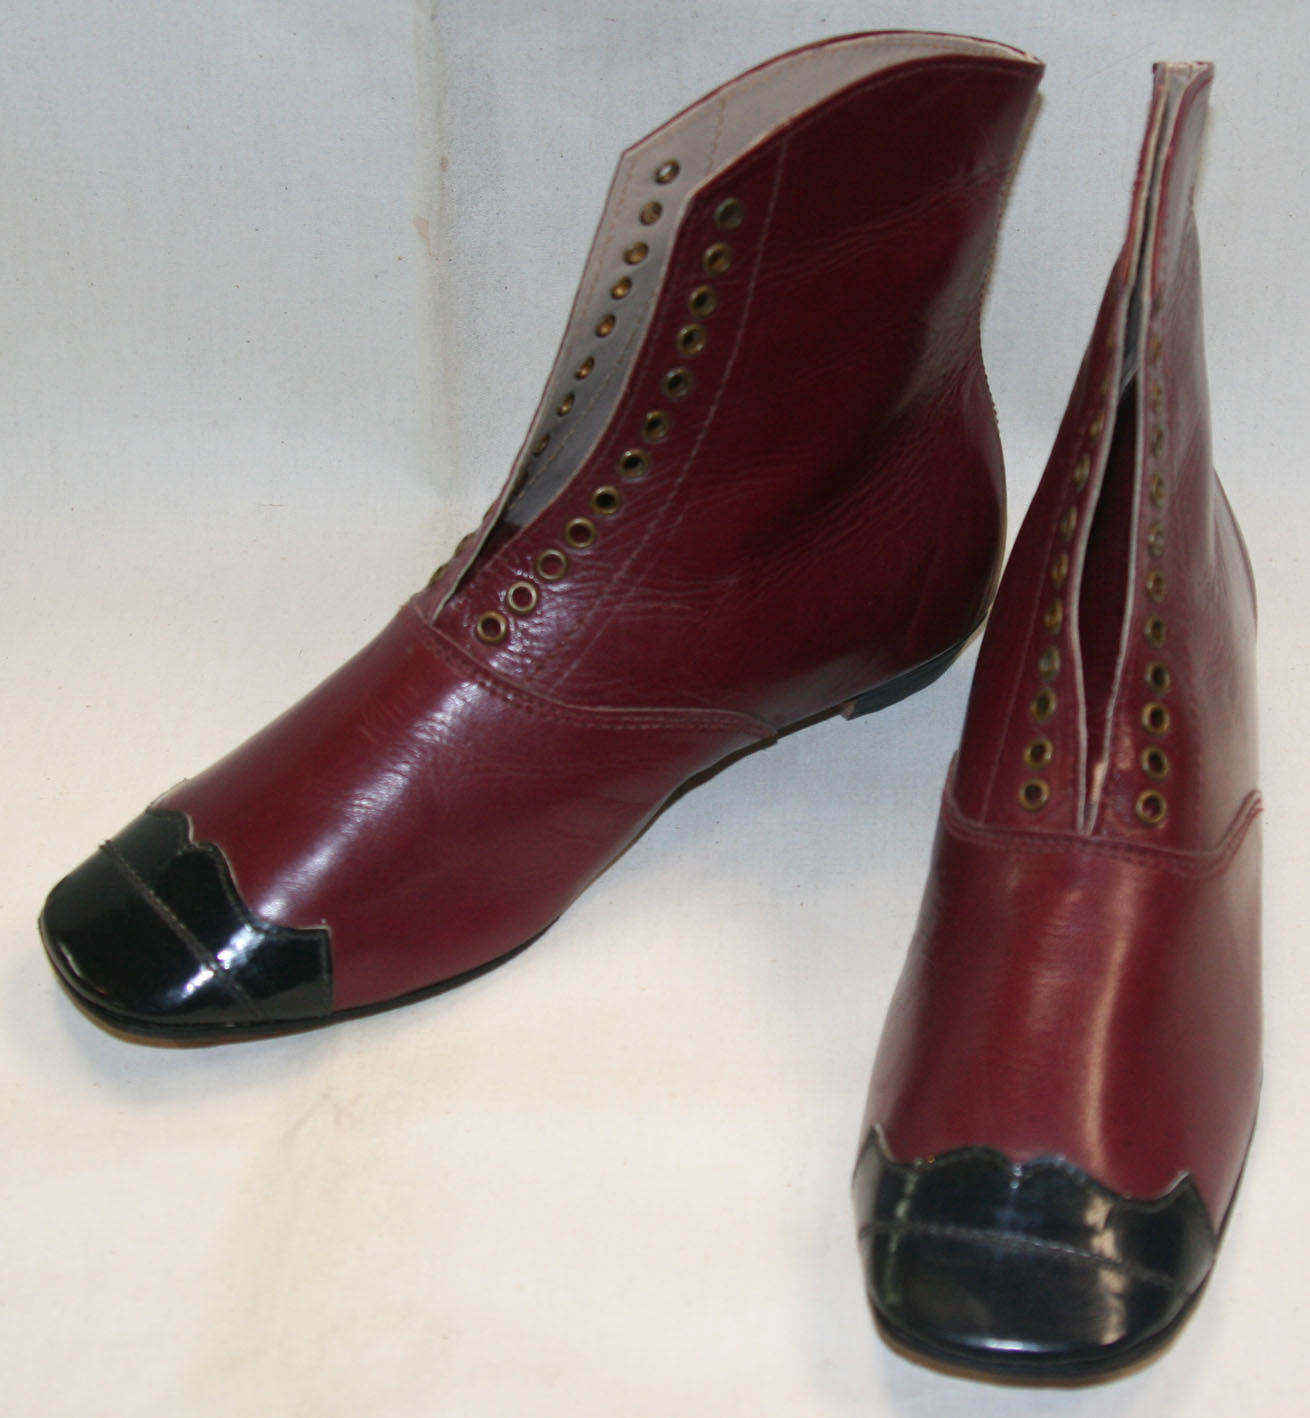 Burgundy balmoral style shoe size 12